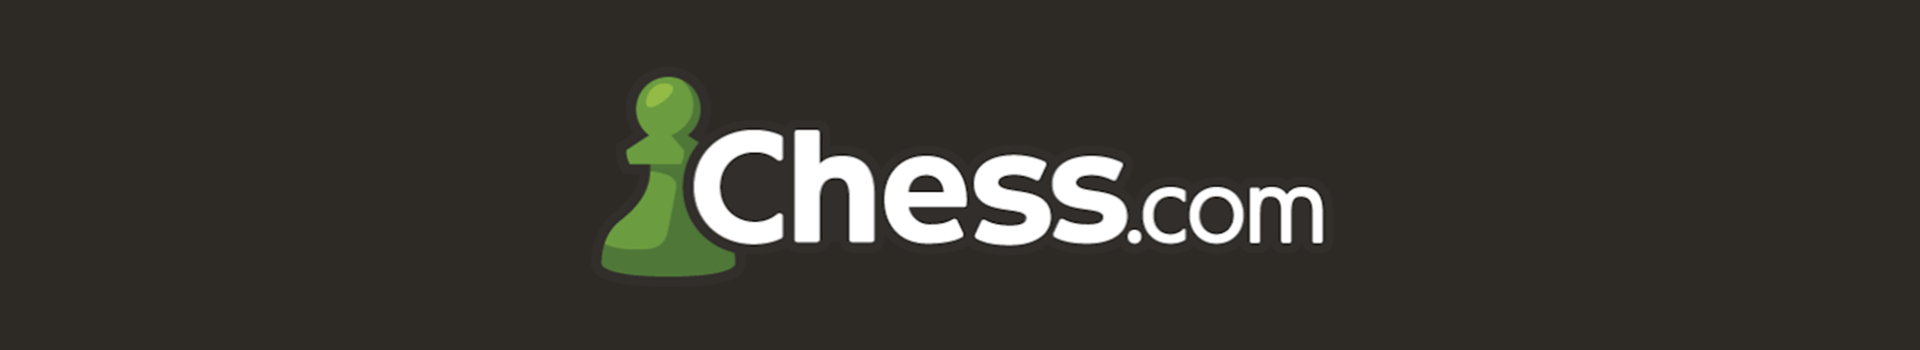 Chess.com - Official Merchandise